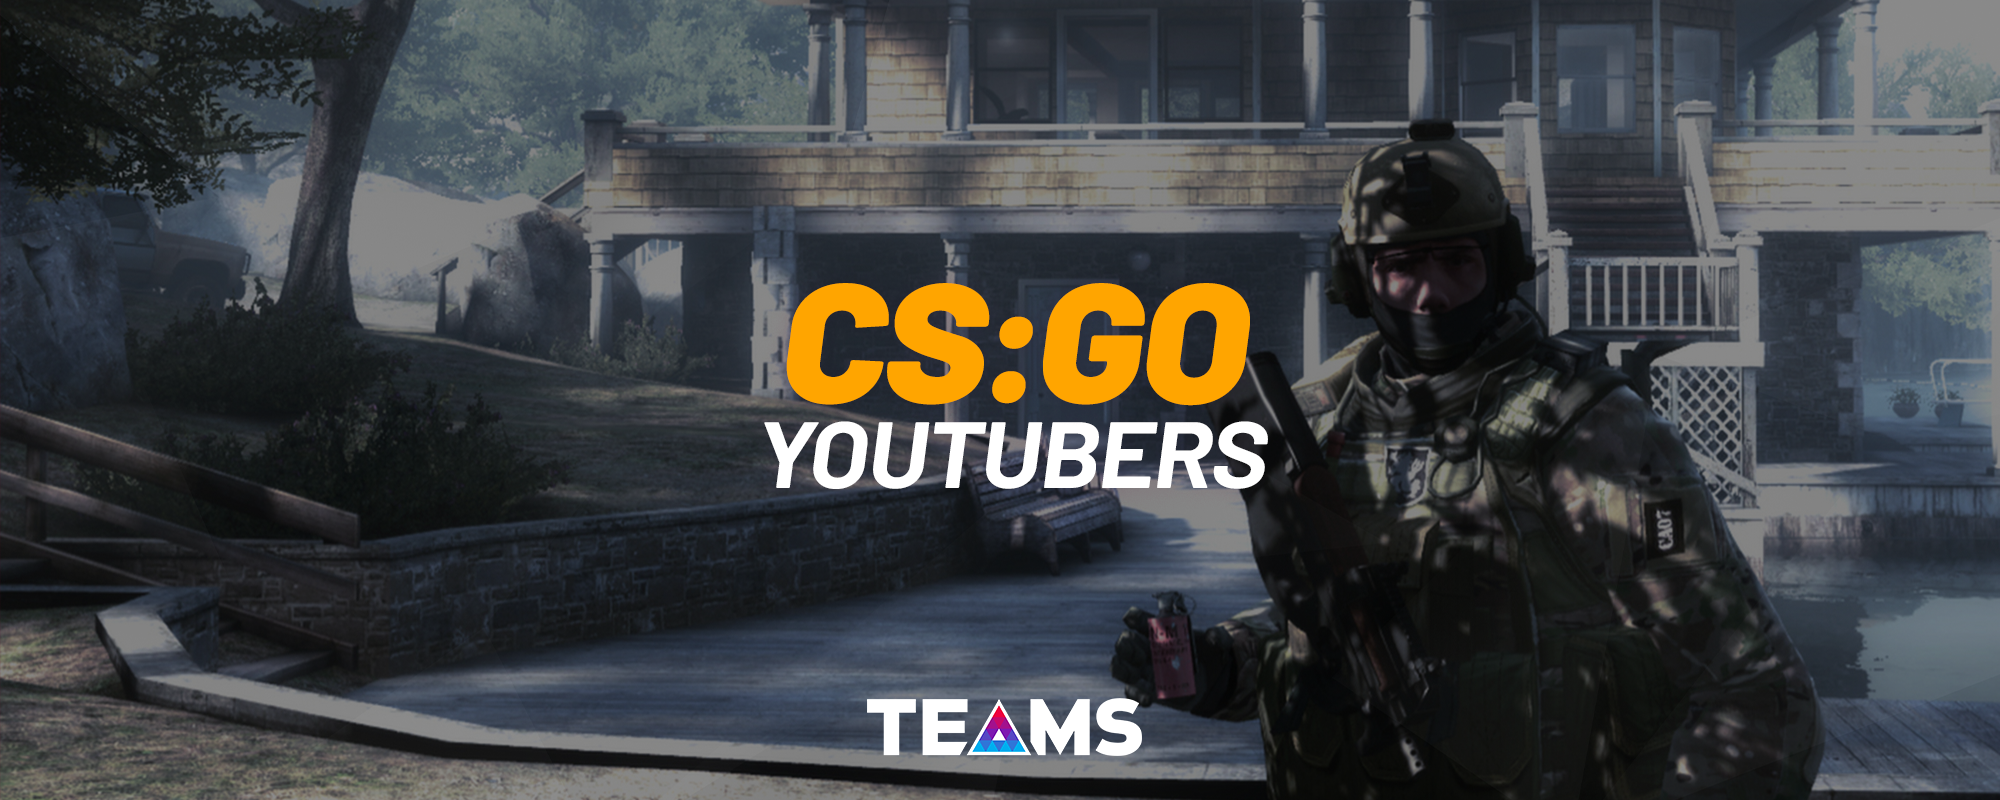 CS:GO YouTubers